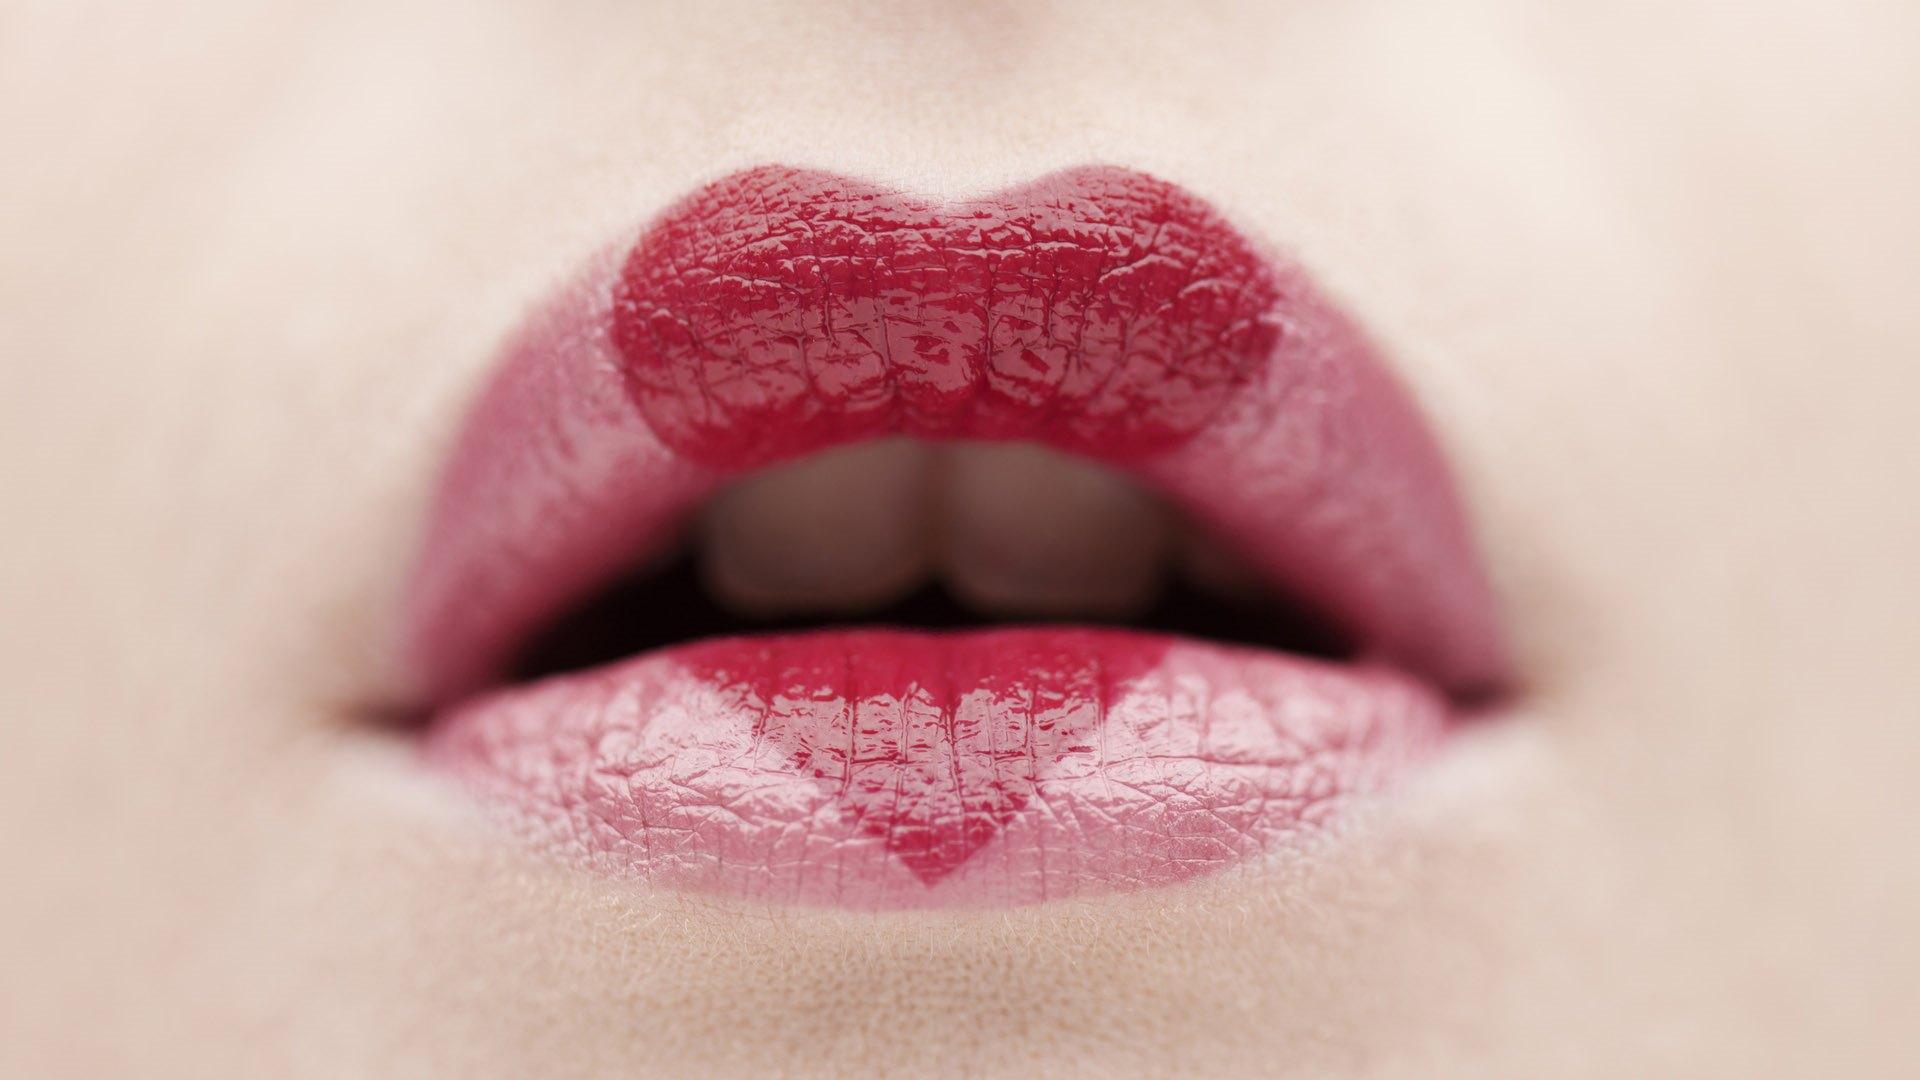 Red Lips by Paullus23 on DeviantArt